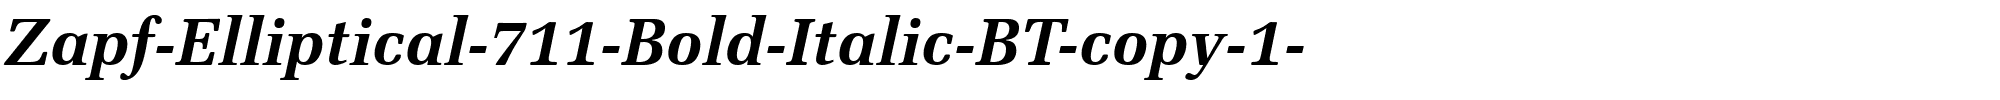 Zapf-Elliptical-711-Bold-Italic-BT-copy-1-